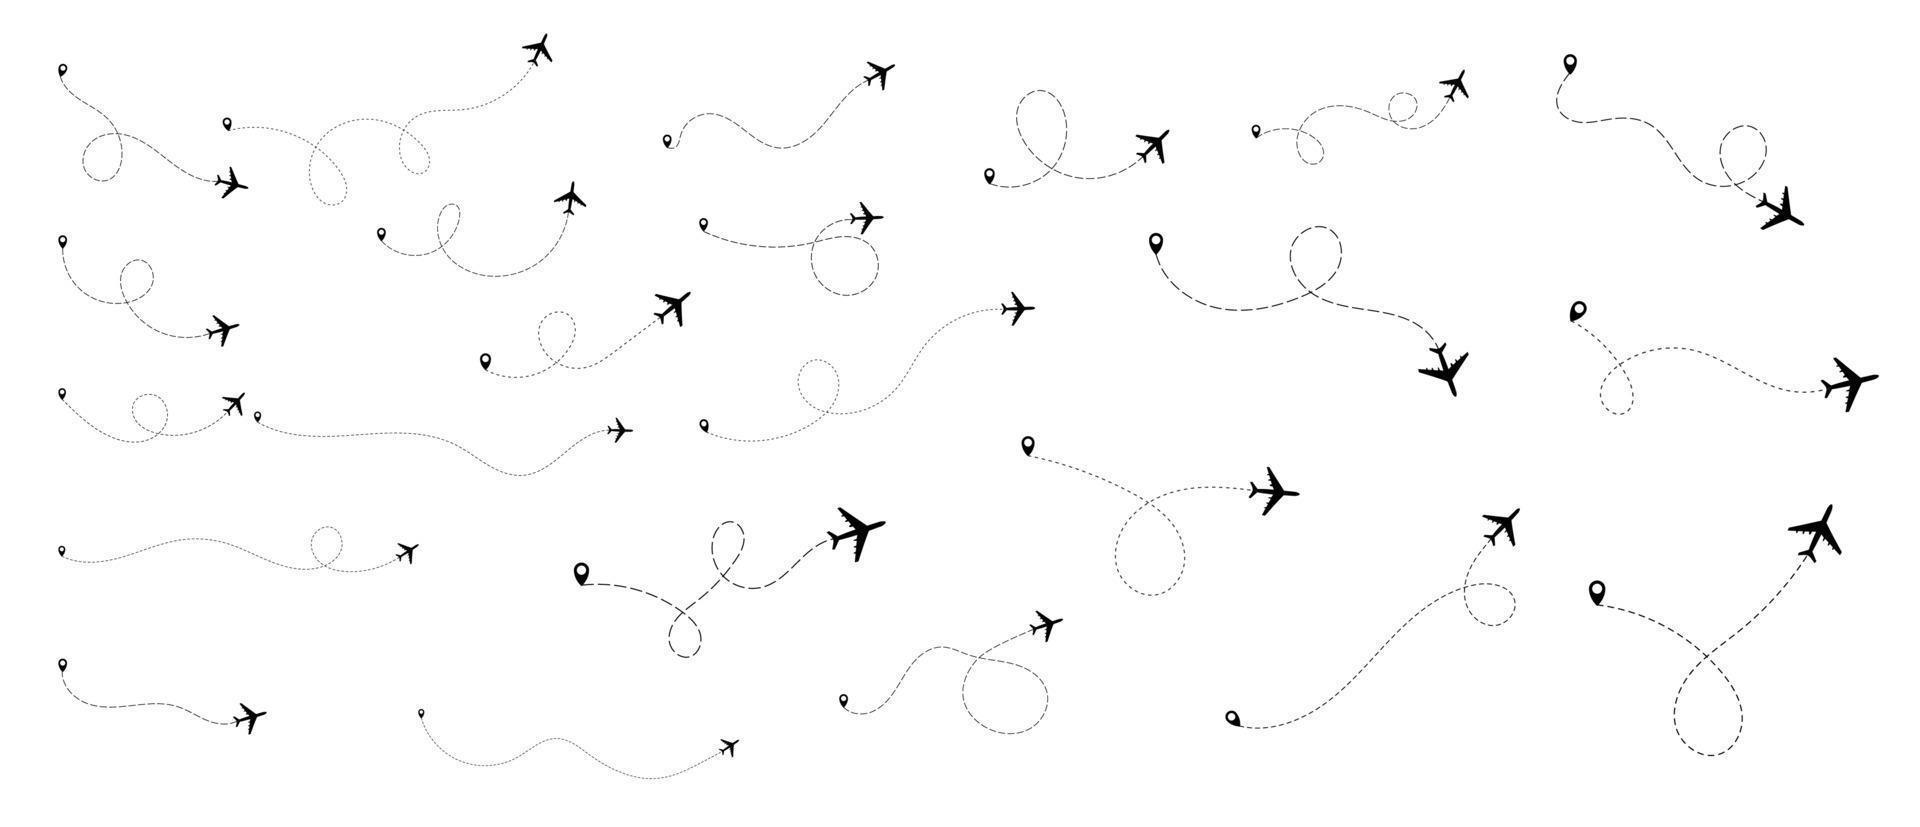 Flugrouten festgelegt. Ebene Wege. Flugzeugverfolgung, Flugzeuge, Reisen, Kartenstifte, Standortstifte. Vektor-Illustration. vektor